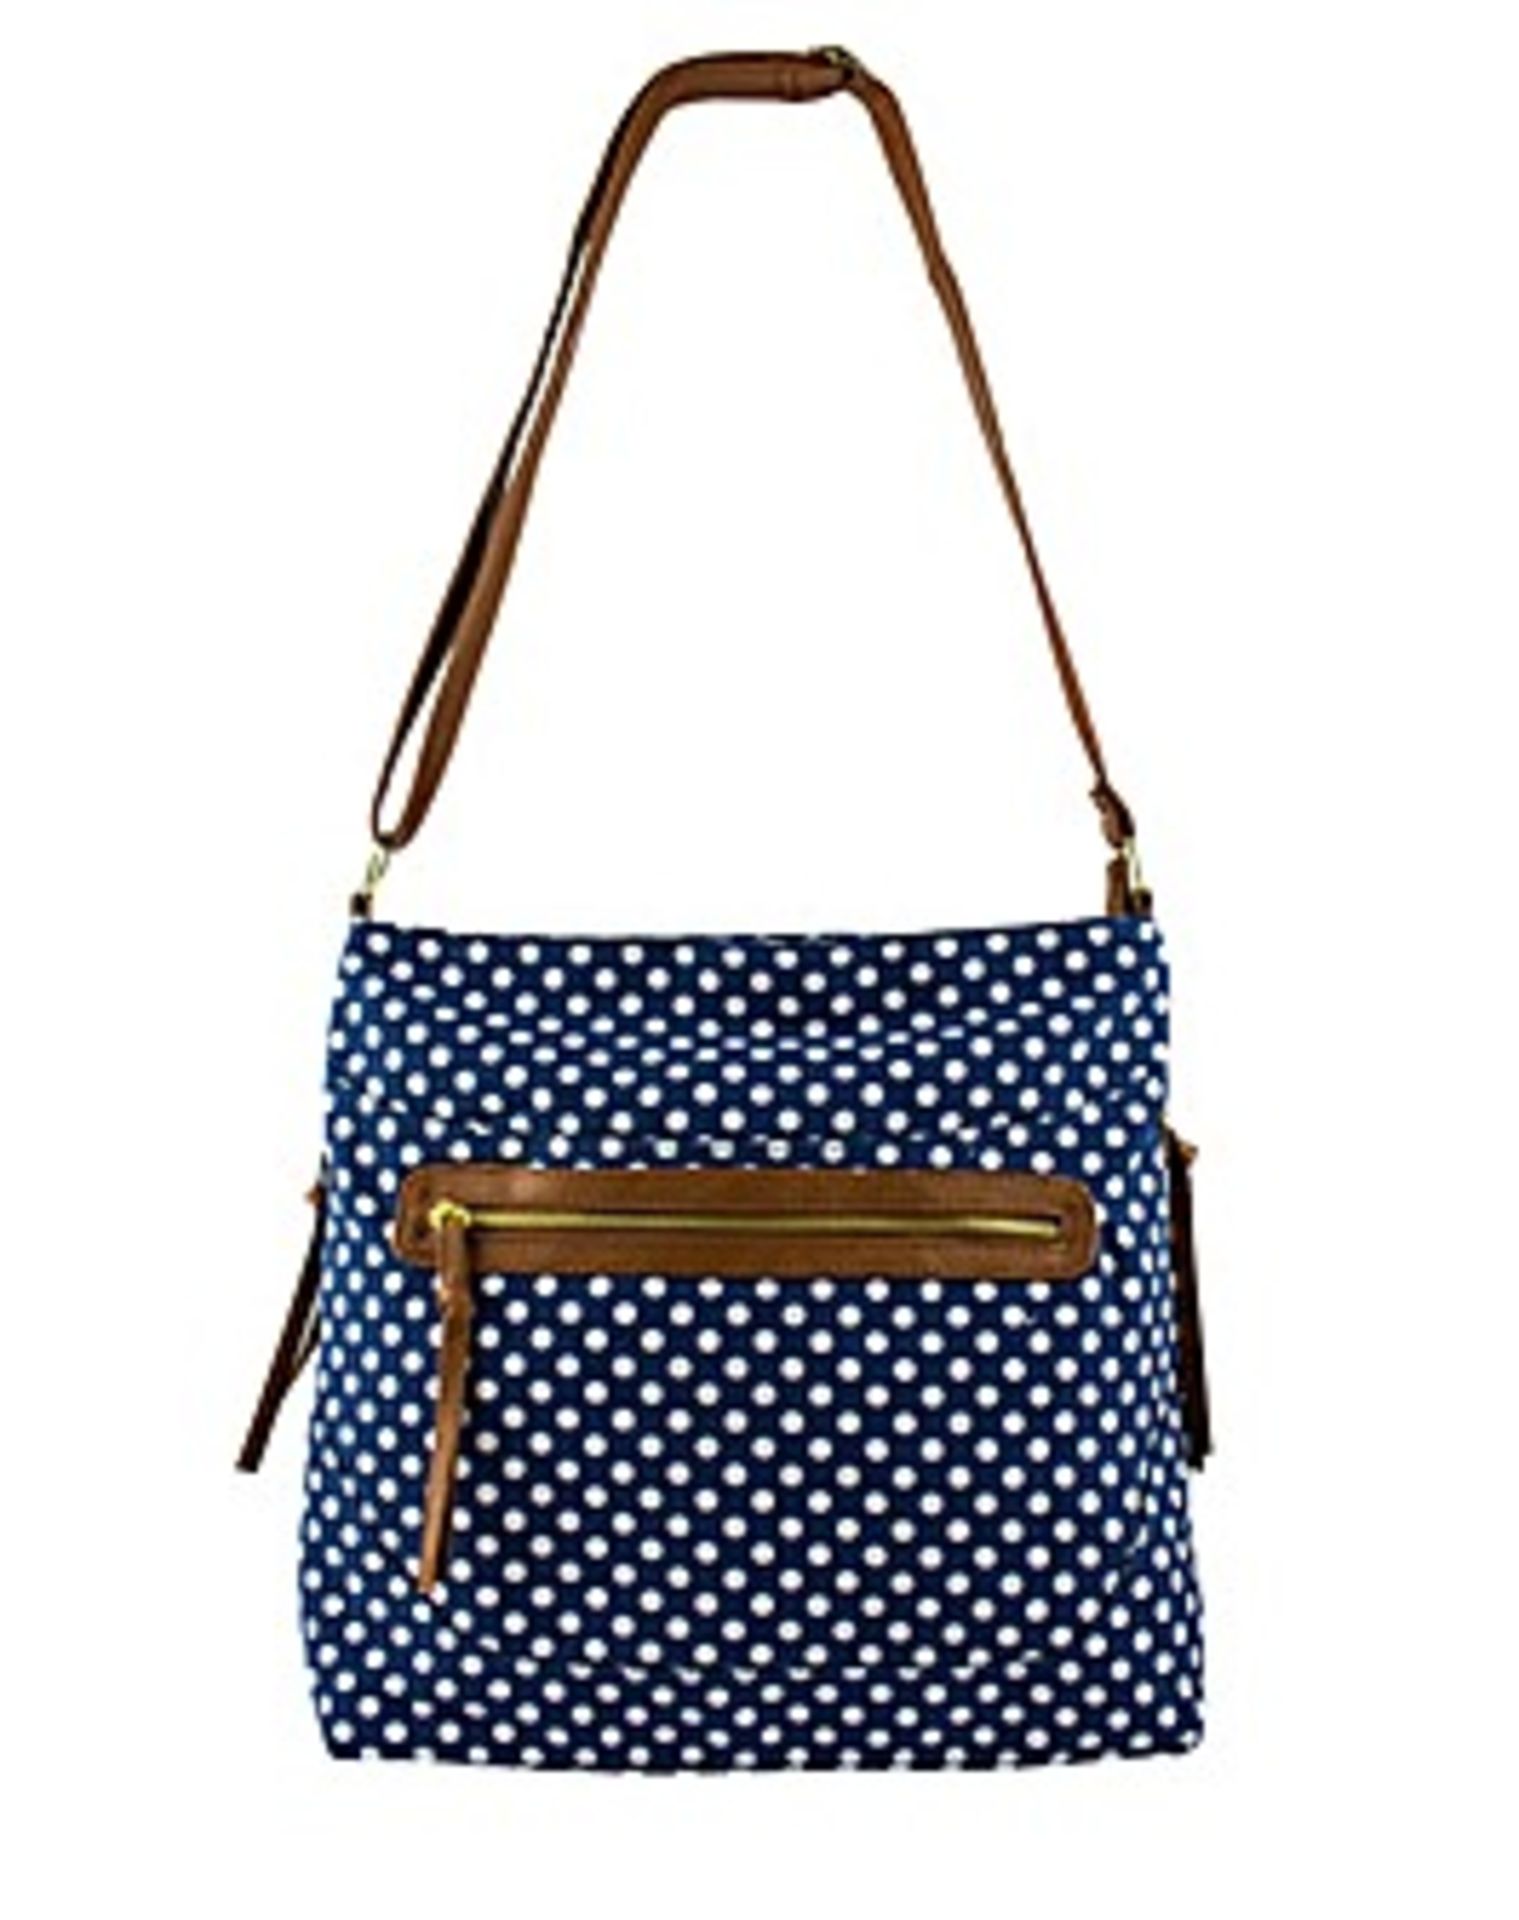 V *TRADE QTY* Brand New Elizabeth Rose Shopper Bag Polka Dot Navy/White With Brown Straps - Zip